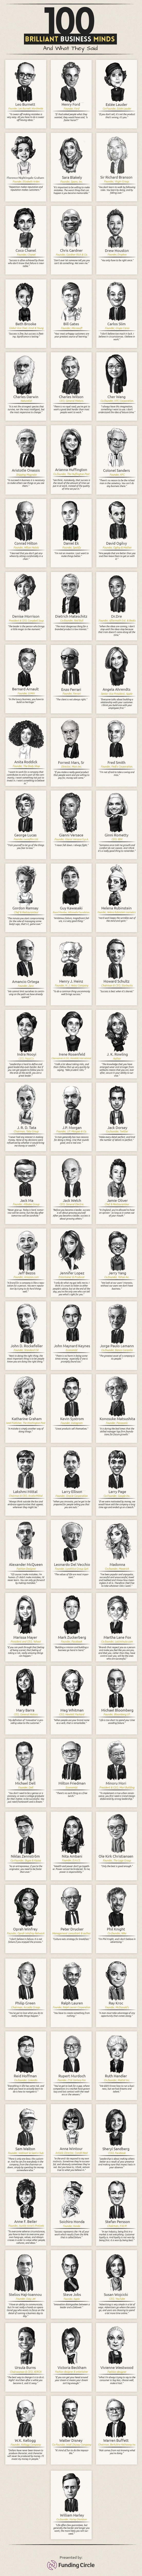 Infografik - 100 Brilliant Business Minds by Funding Circle